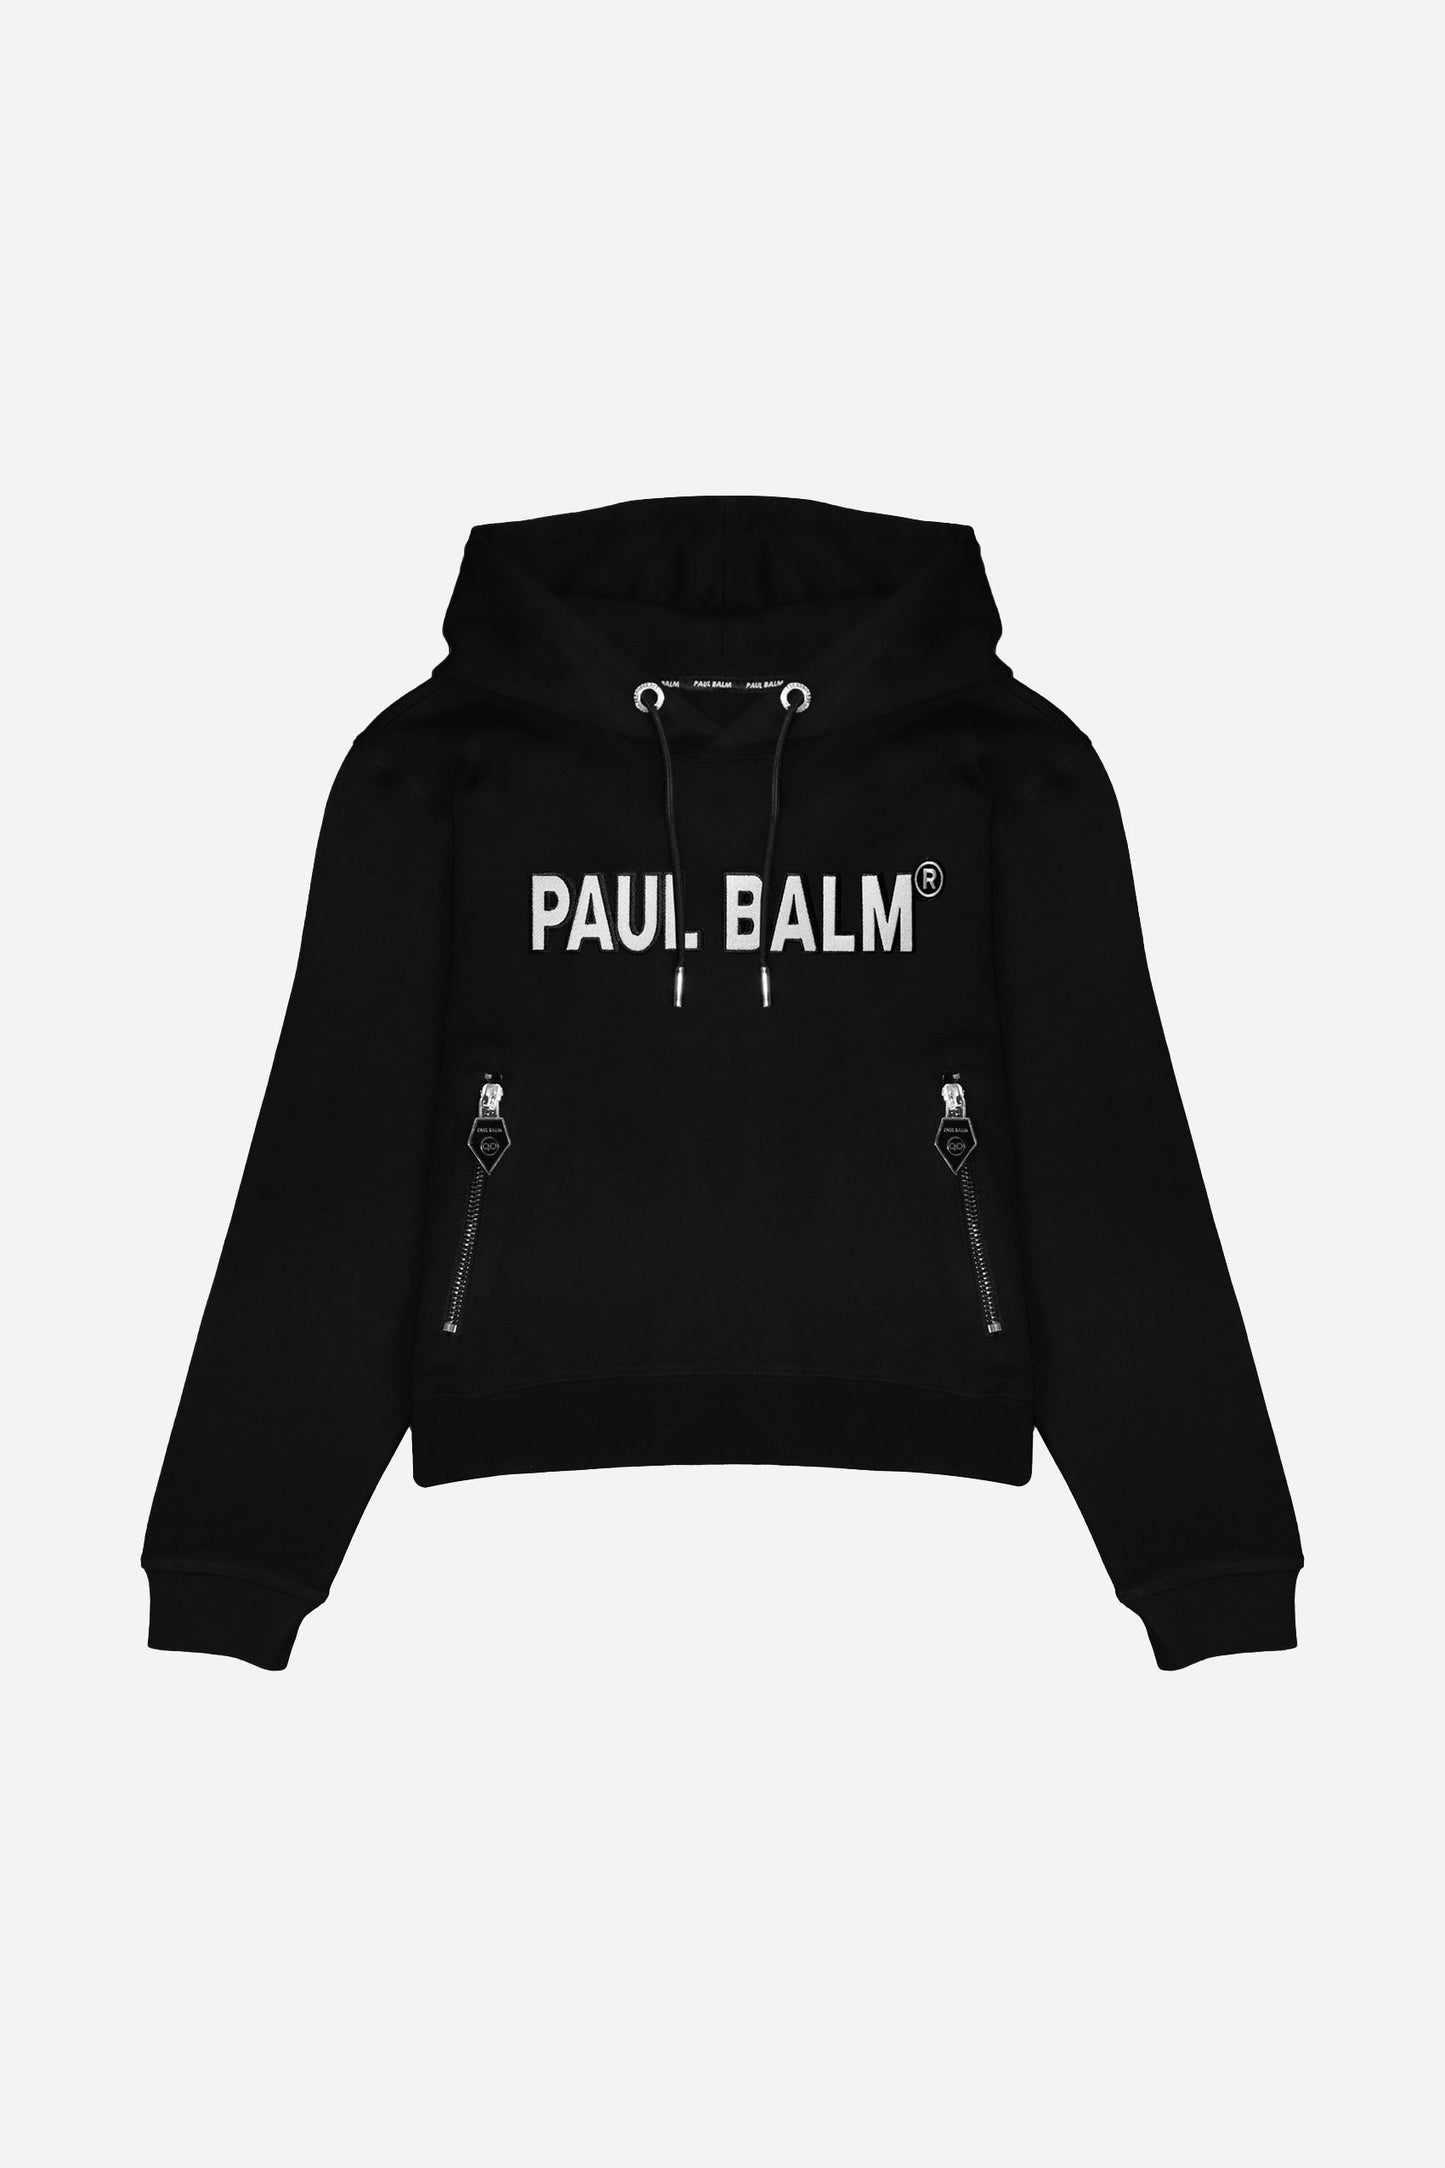 PAUL BALM Embroidery white Set